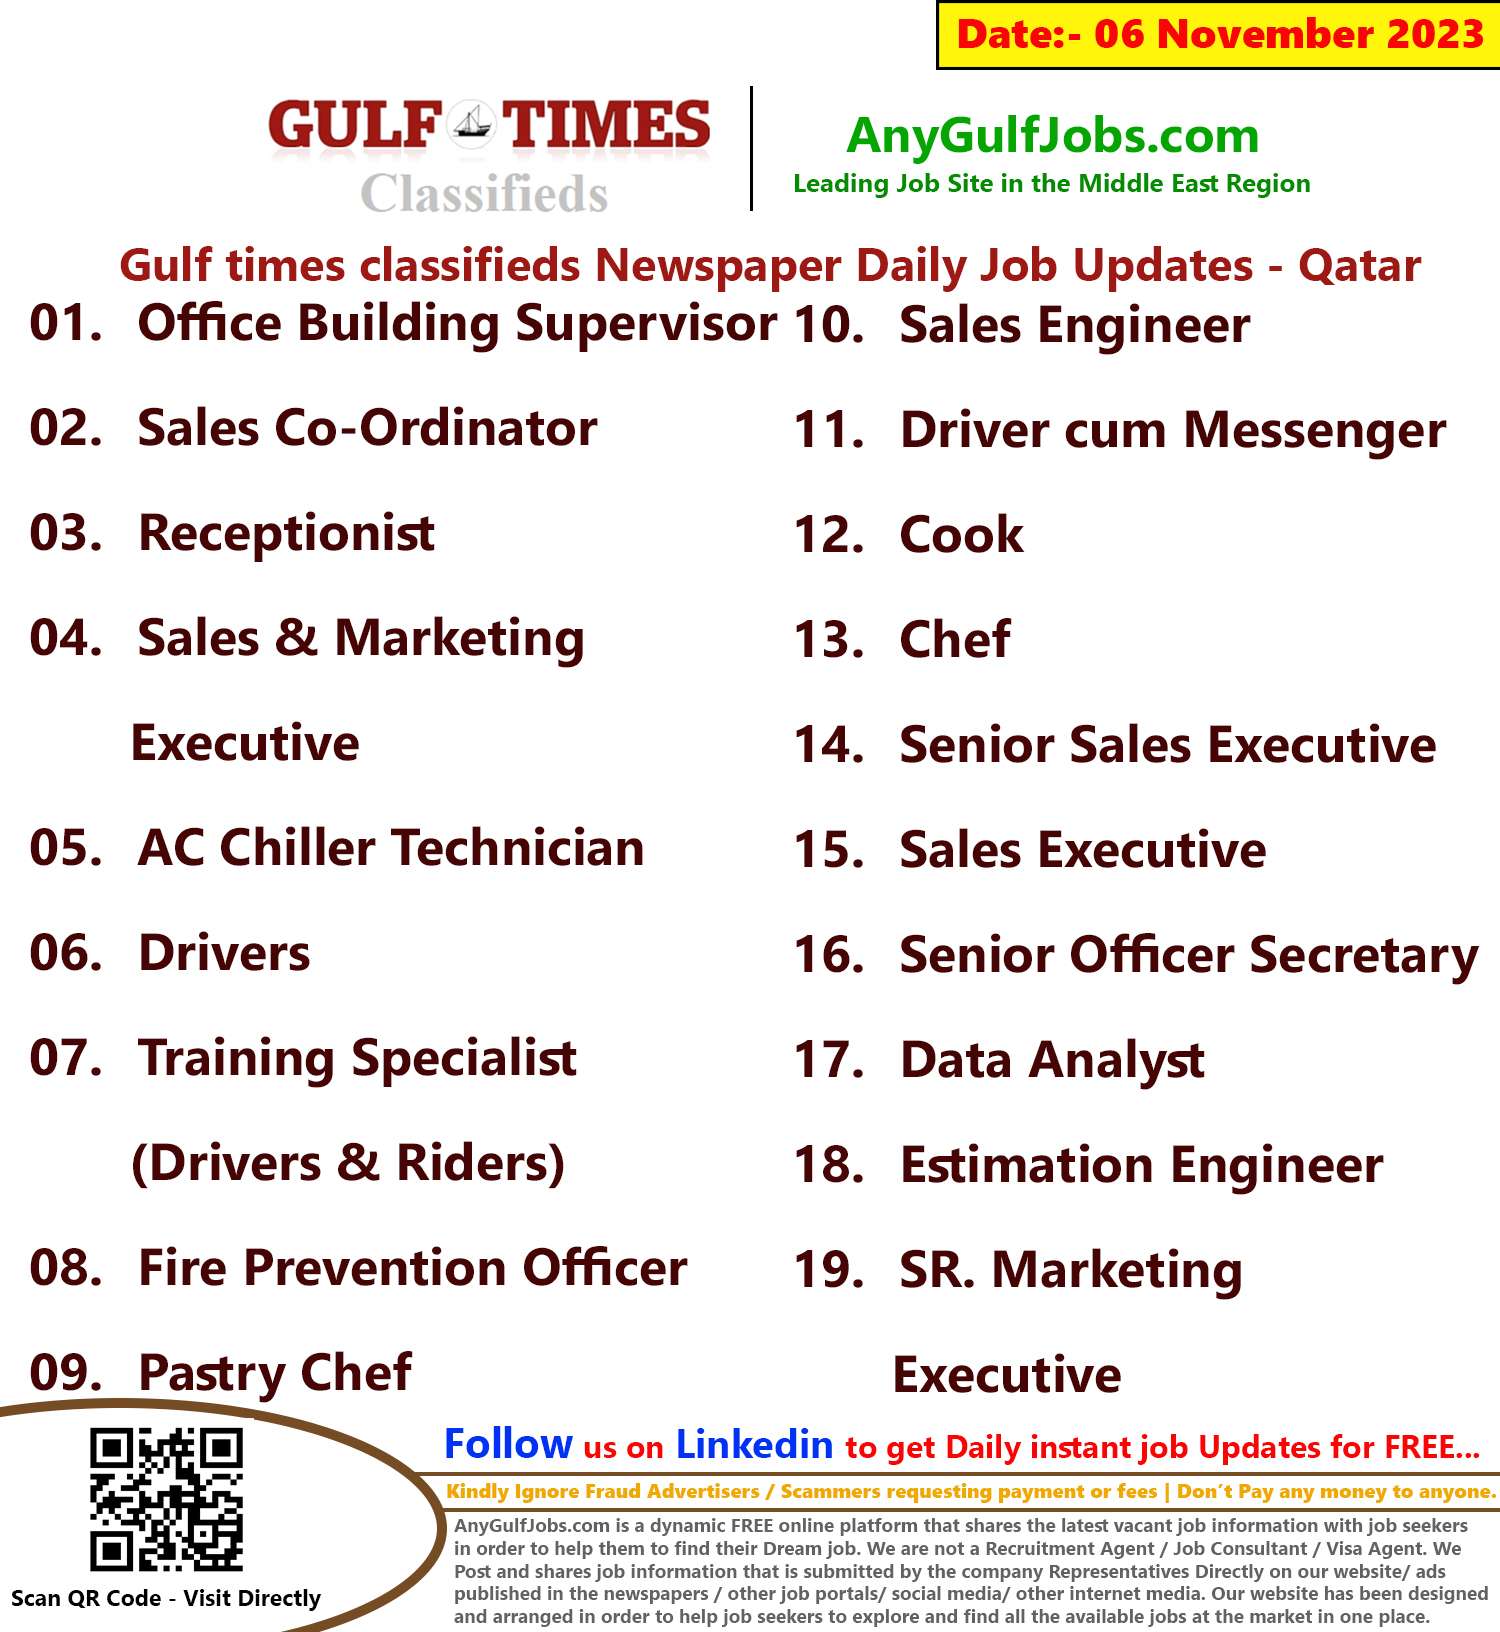 Gulf times classifieds Job Vacancies Qatar - 06 November 2023